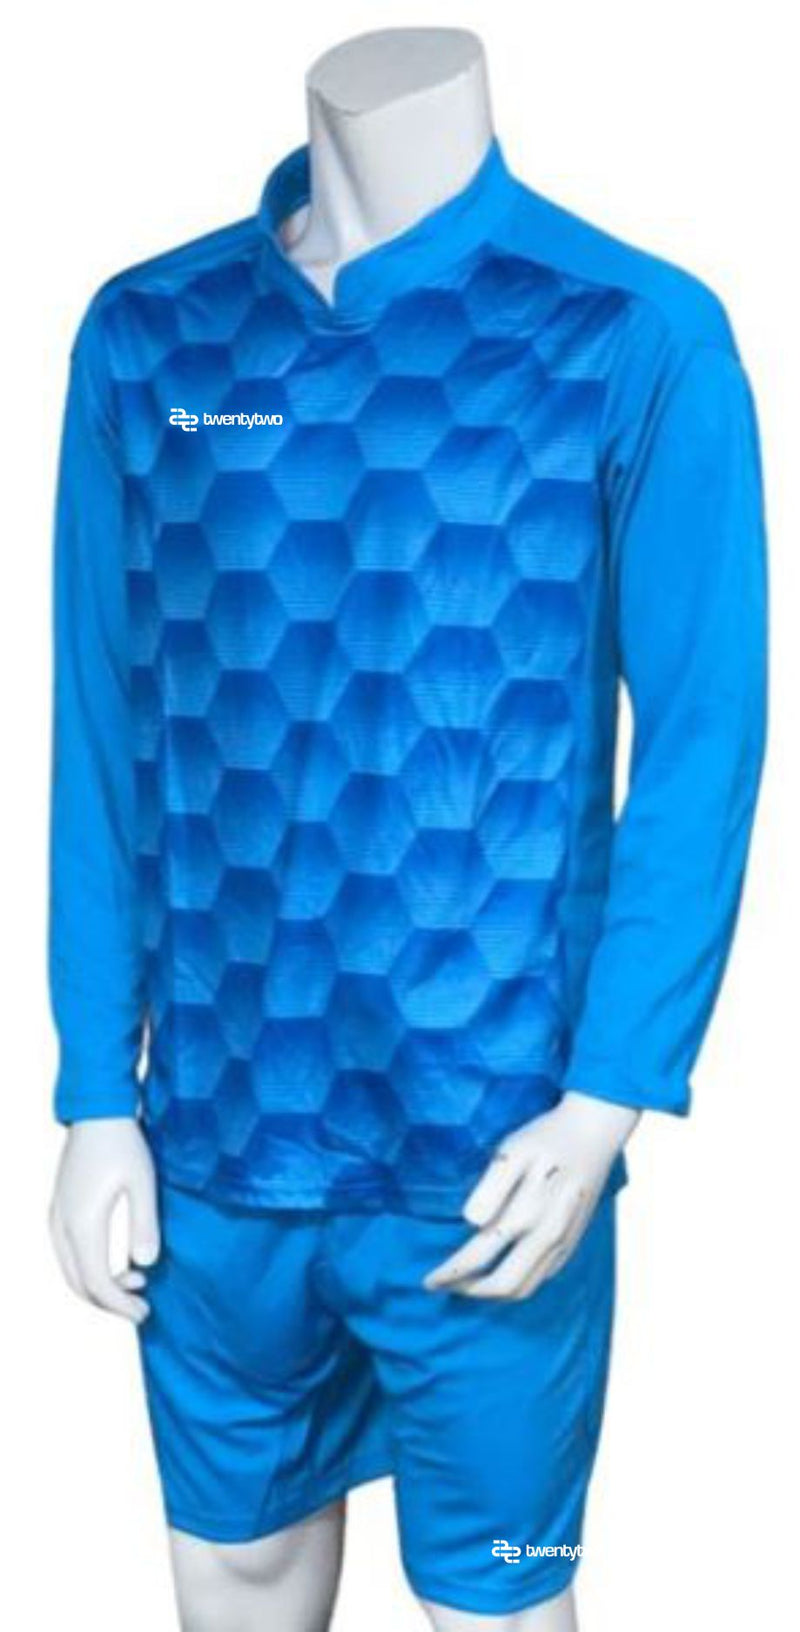 twentytwo Goalkeeper Kit